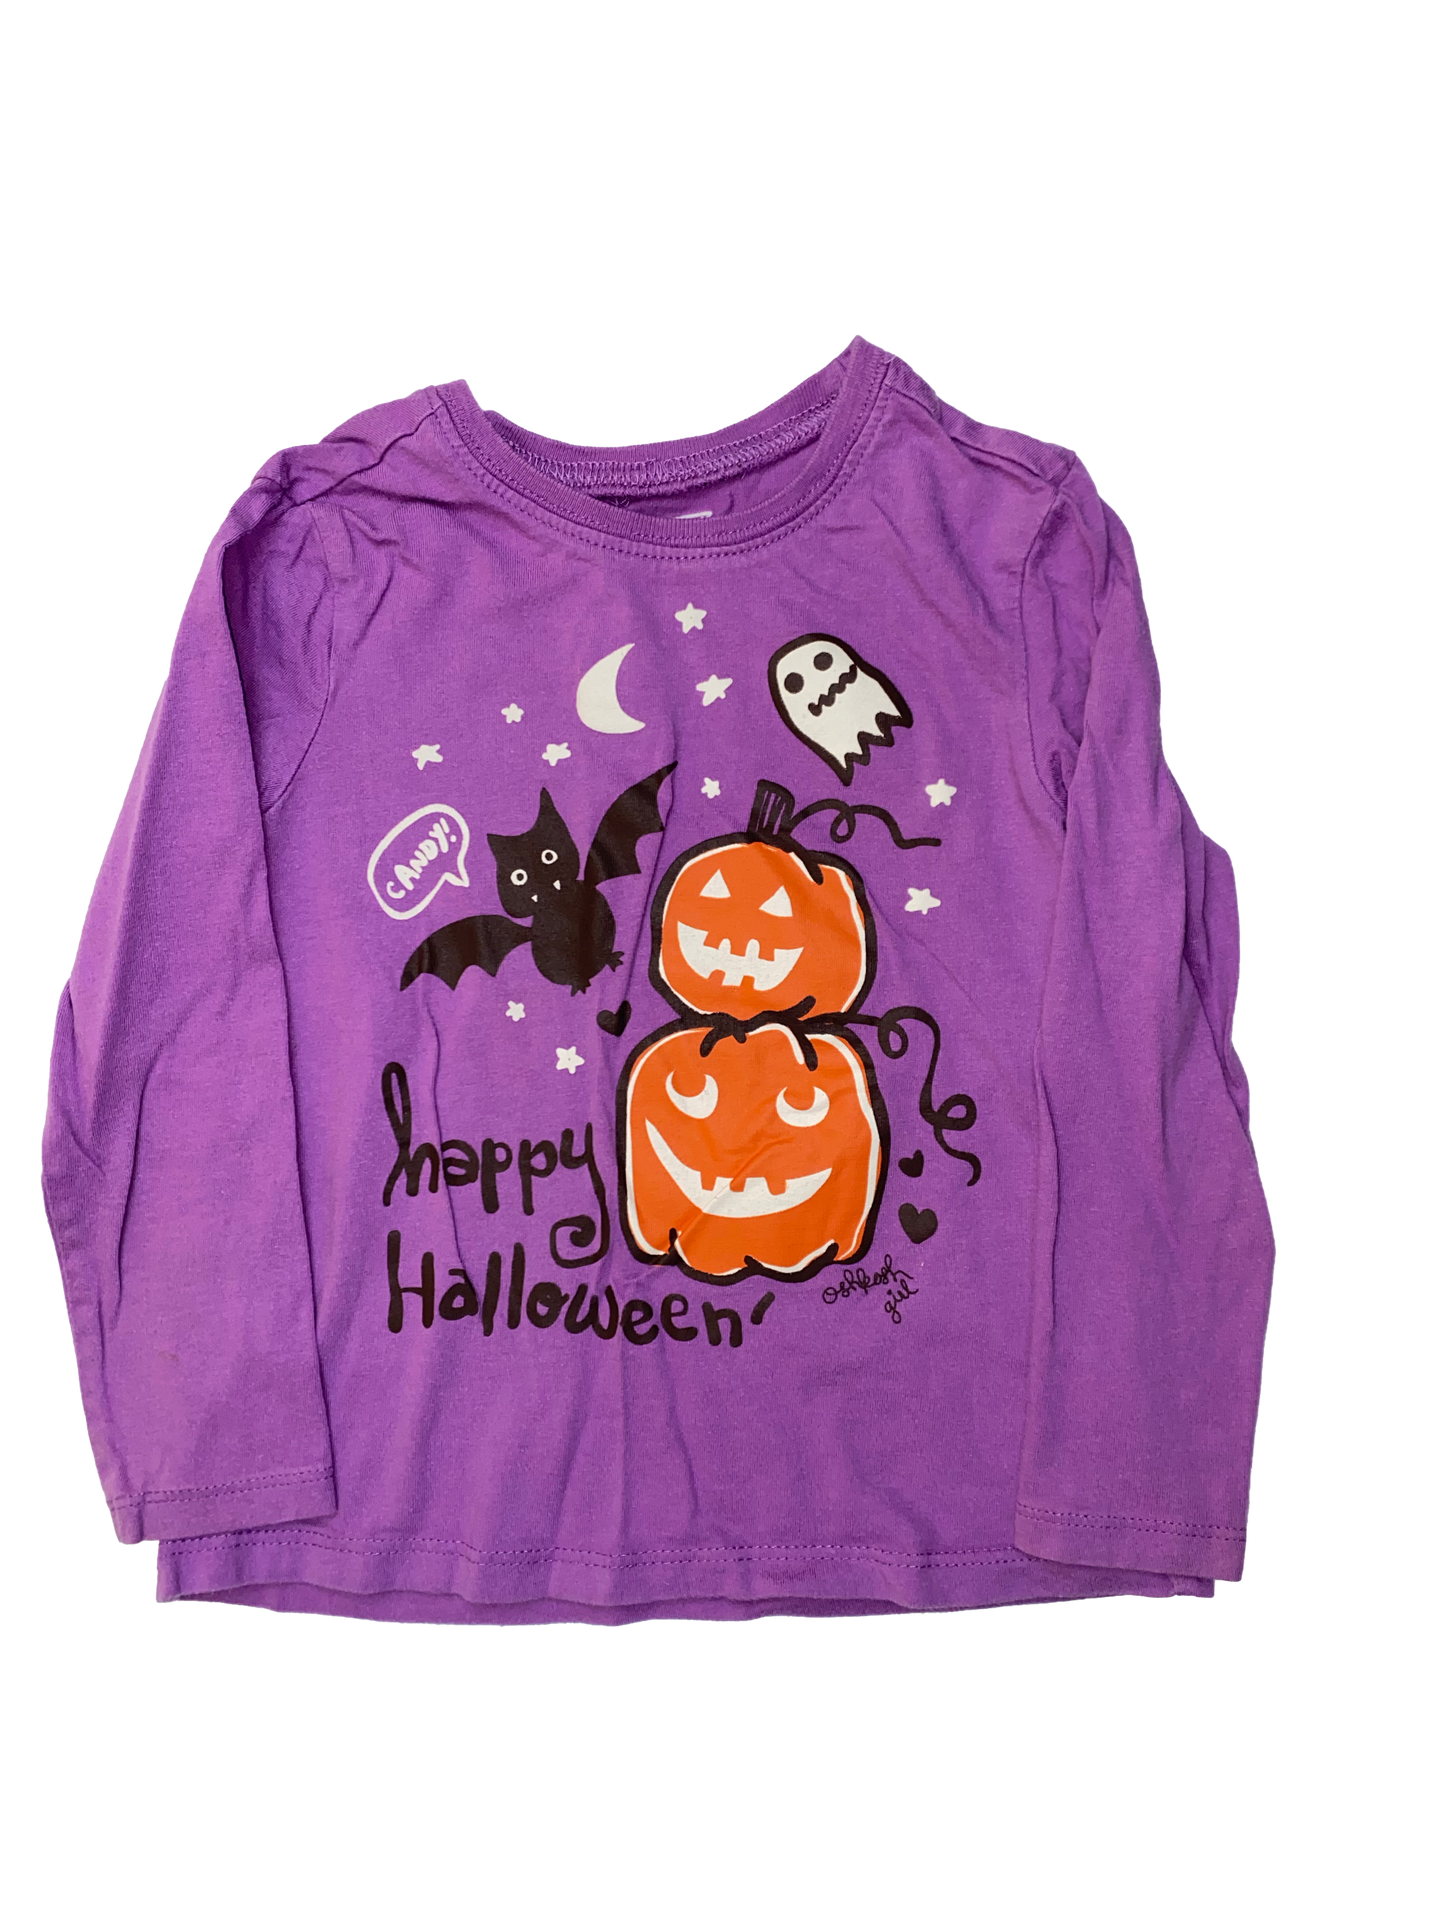 OshKosh Purple Long Sleeve Shirt "Happy Halloween" 3T